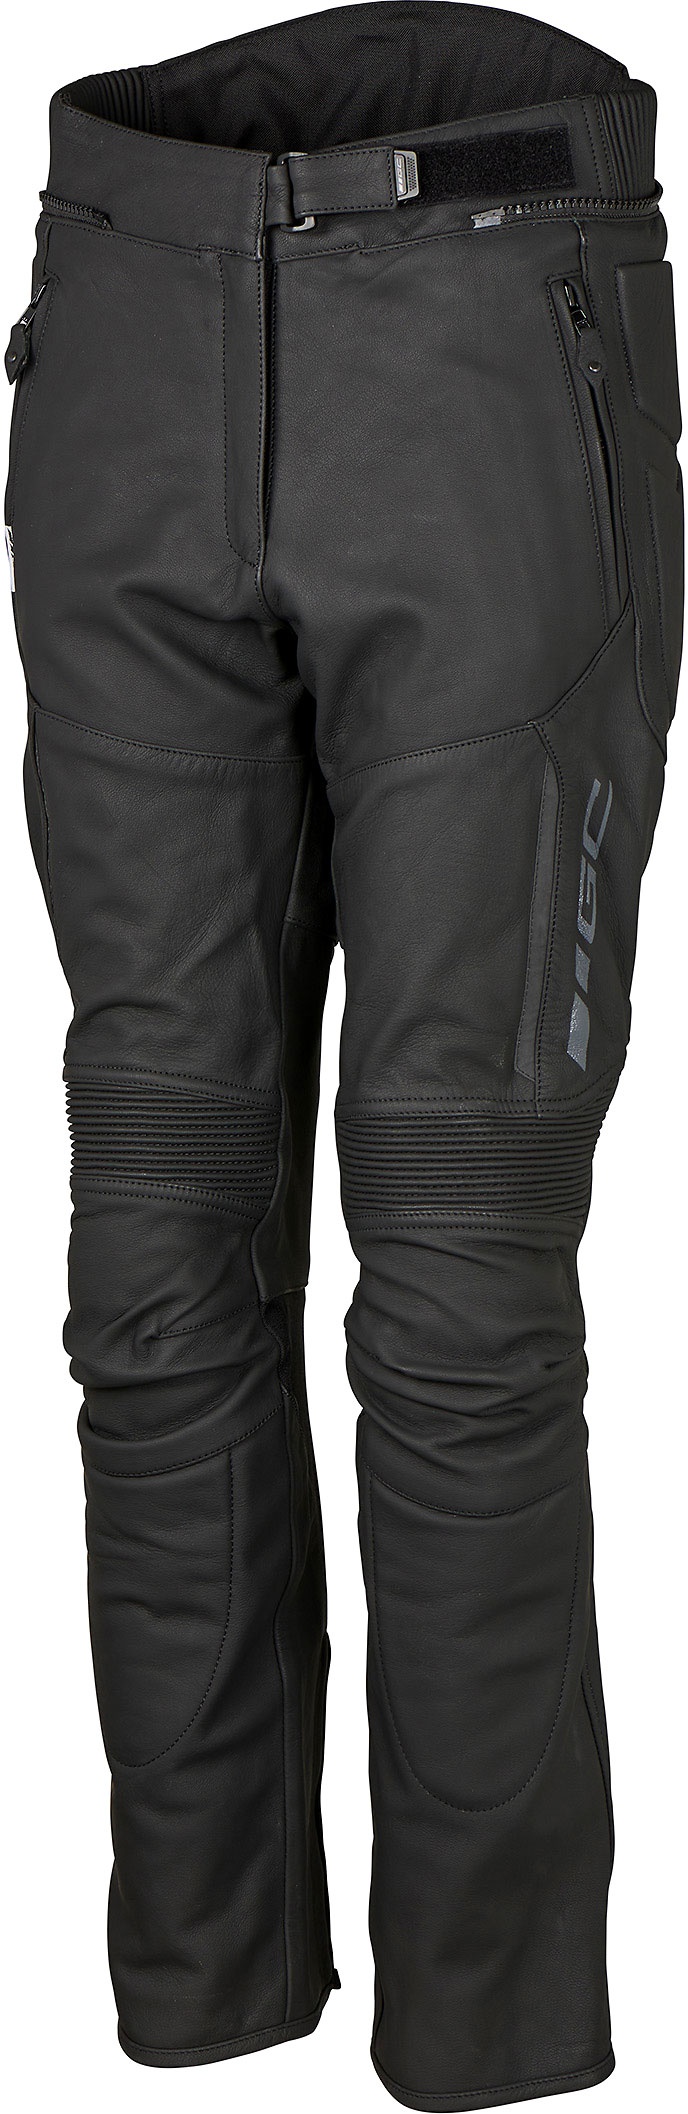 GC Bikewear Sienna, pantalon en cuir pour femmes - Noir - 48